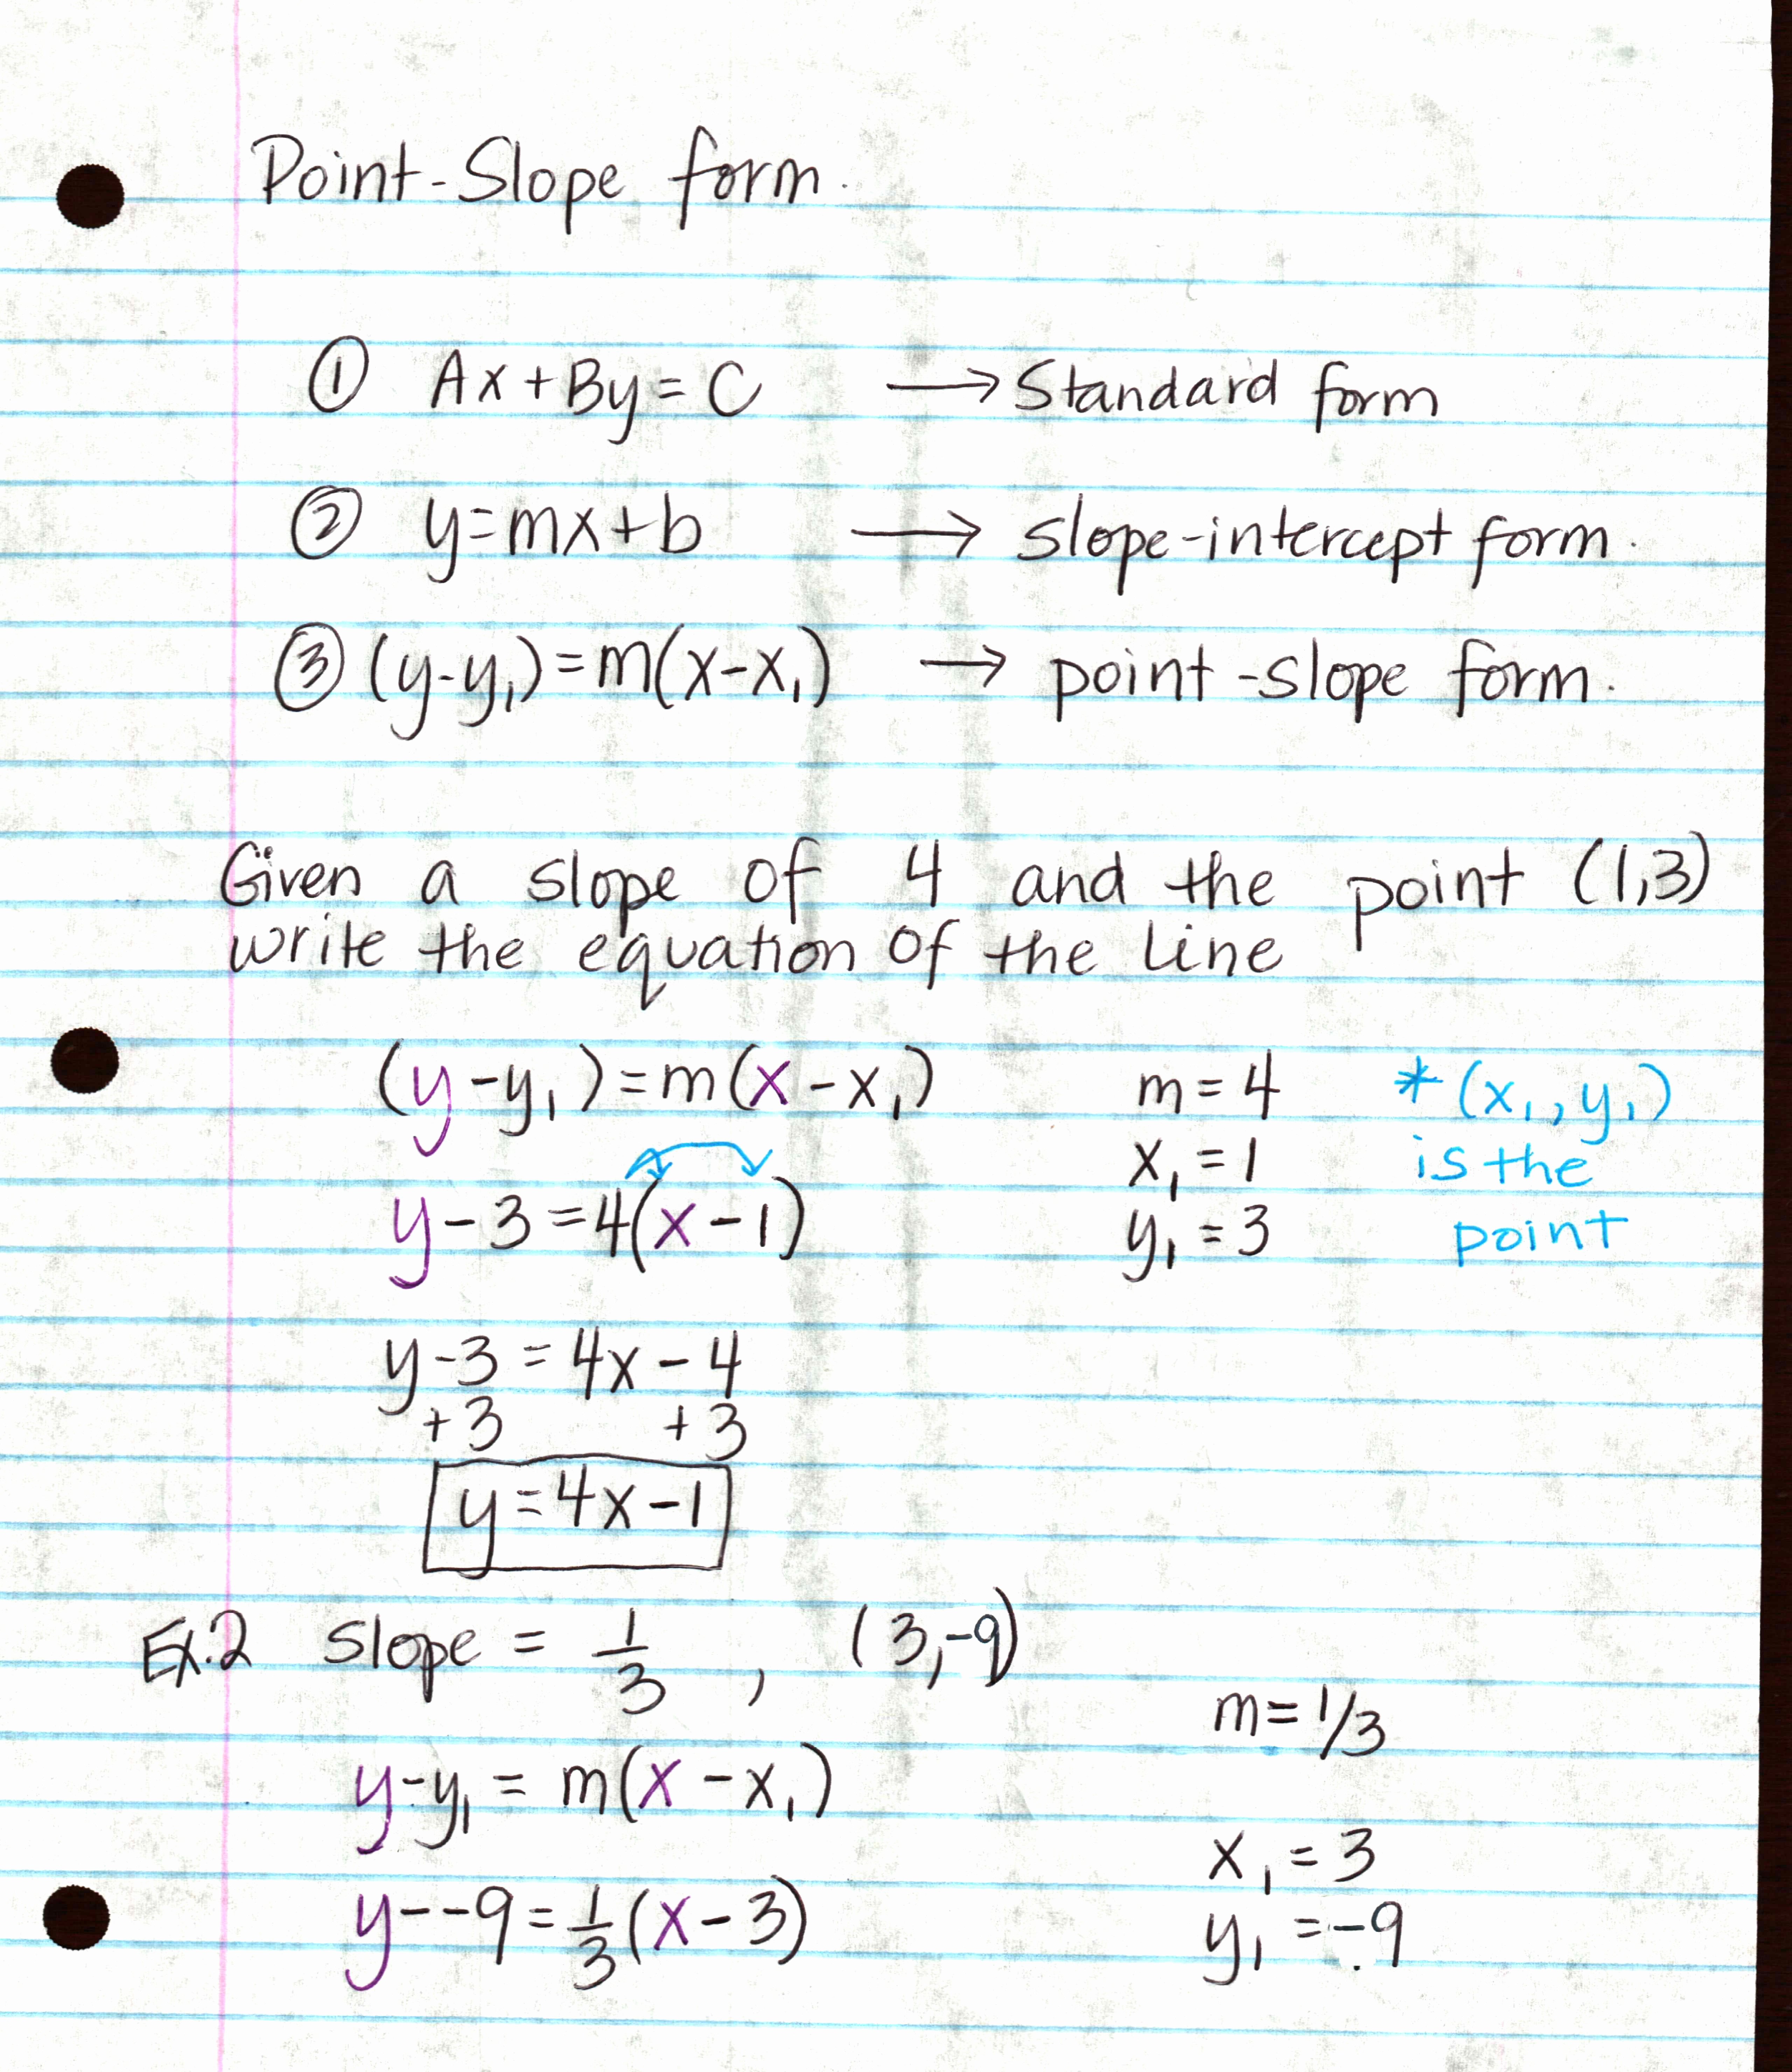 Point Slope form Worksheet Inspirational Costelloalg Algebra Homework 2012 2013